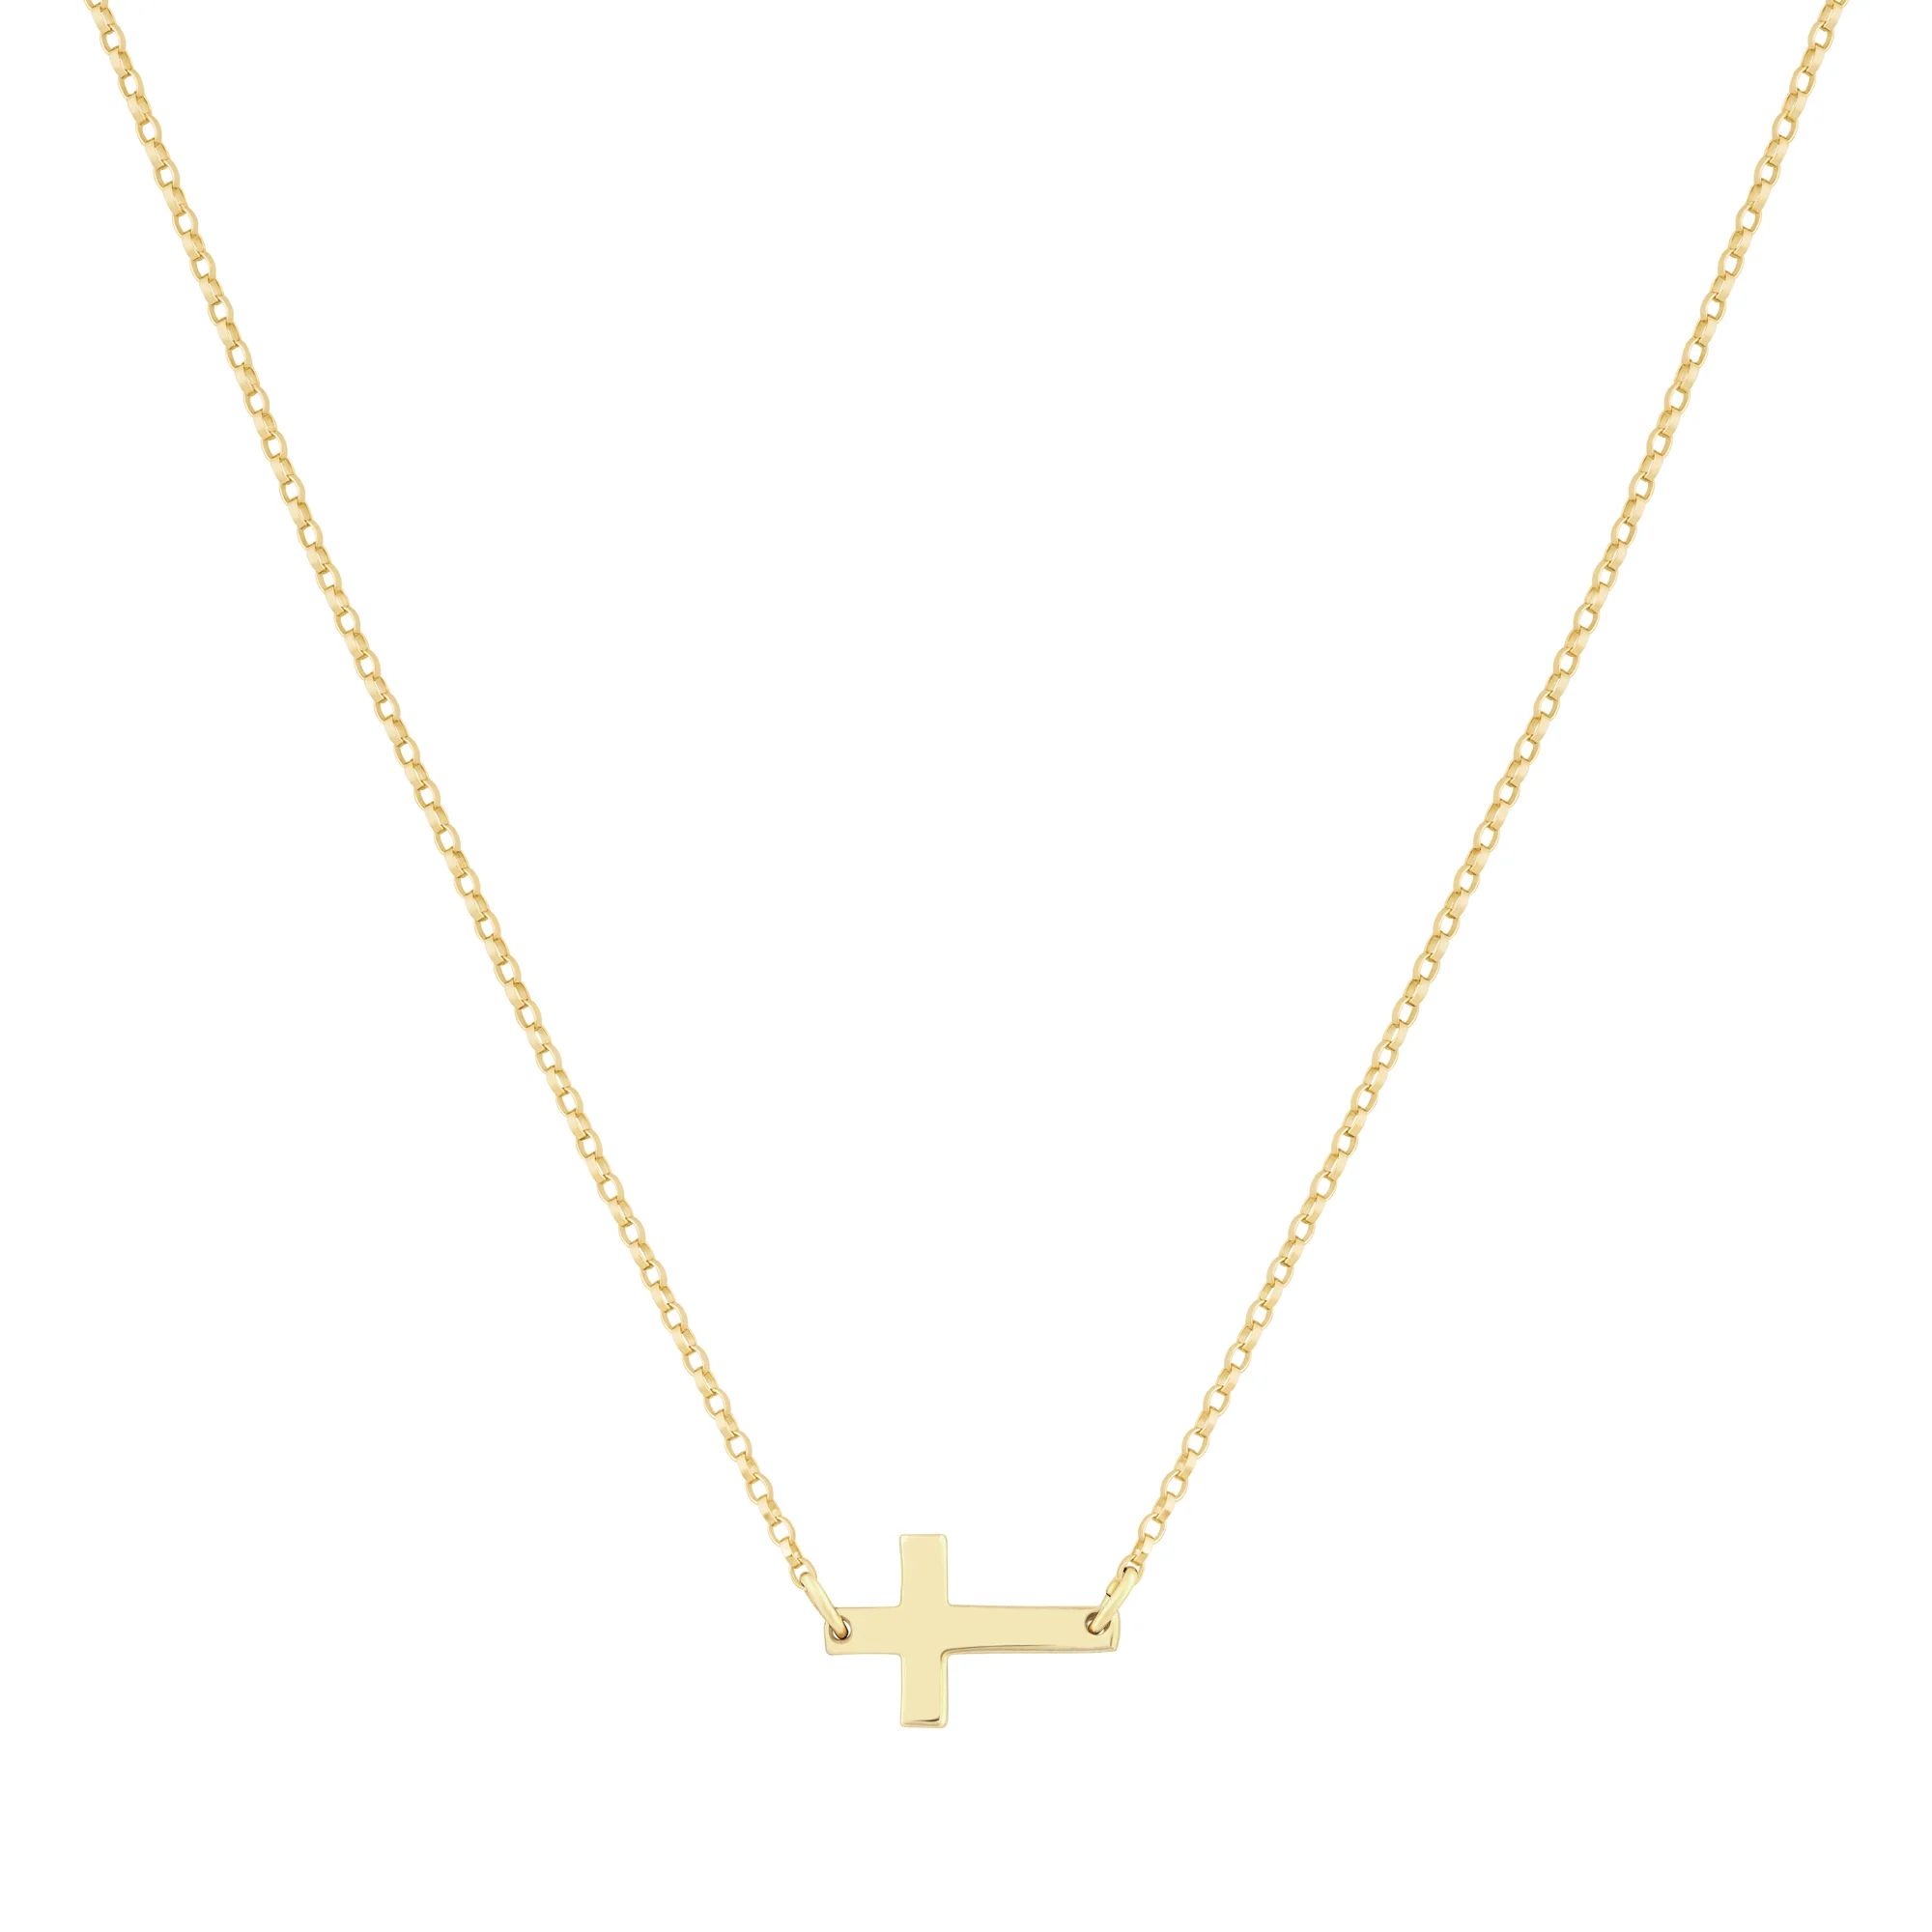 Mini Creed Necklace | Electric Picks Jewelry